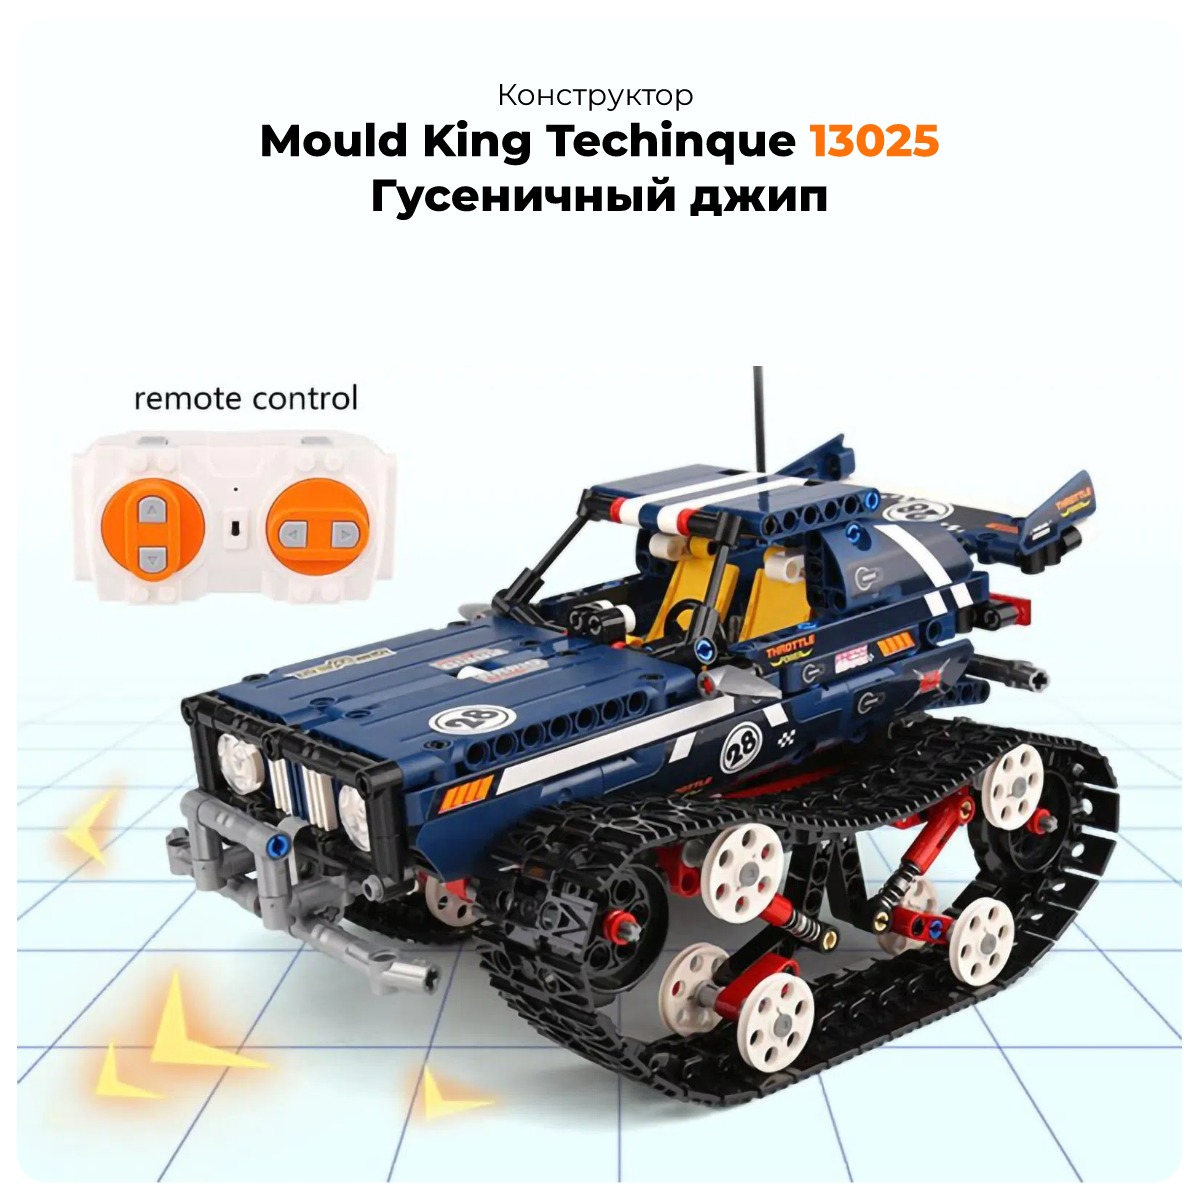 Mould-King-Techinque-13025-01